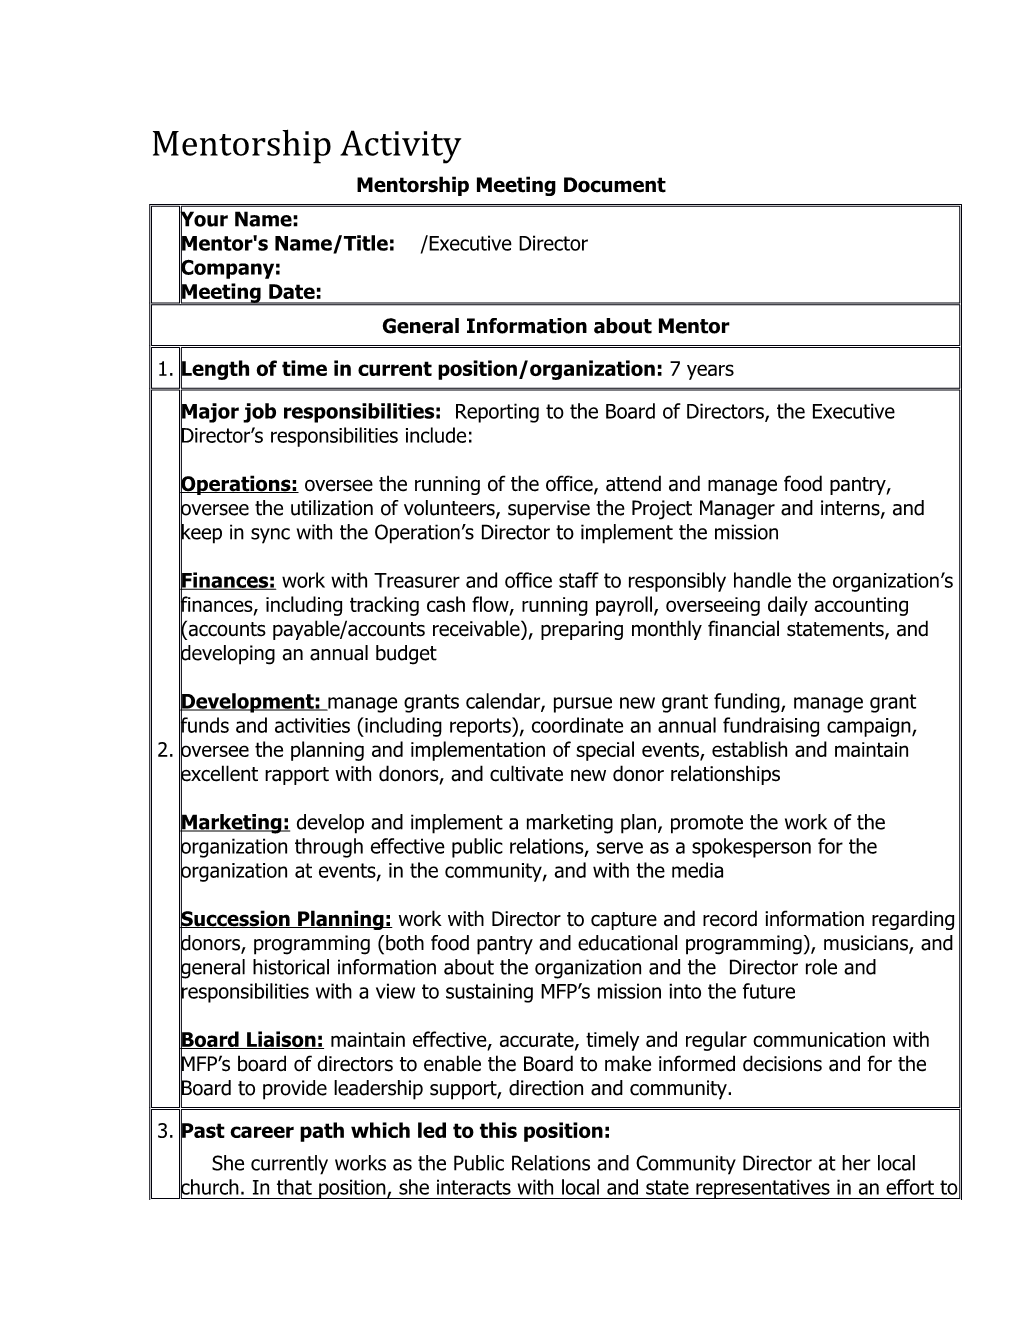 Mentorship Meeting Document